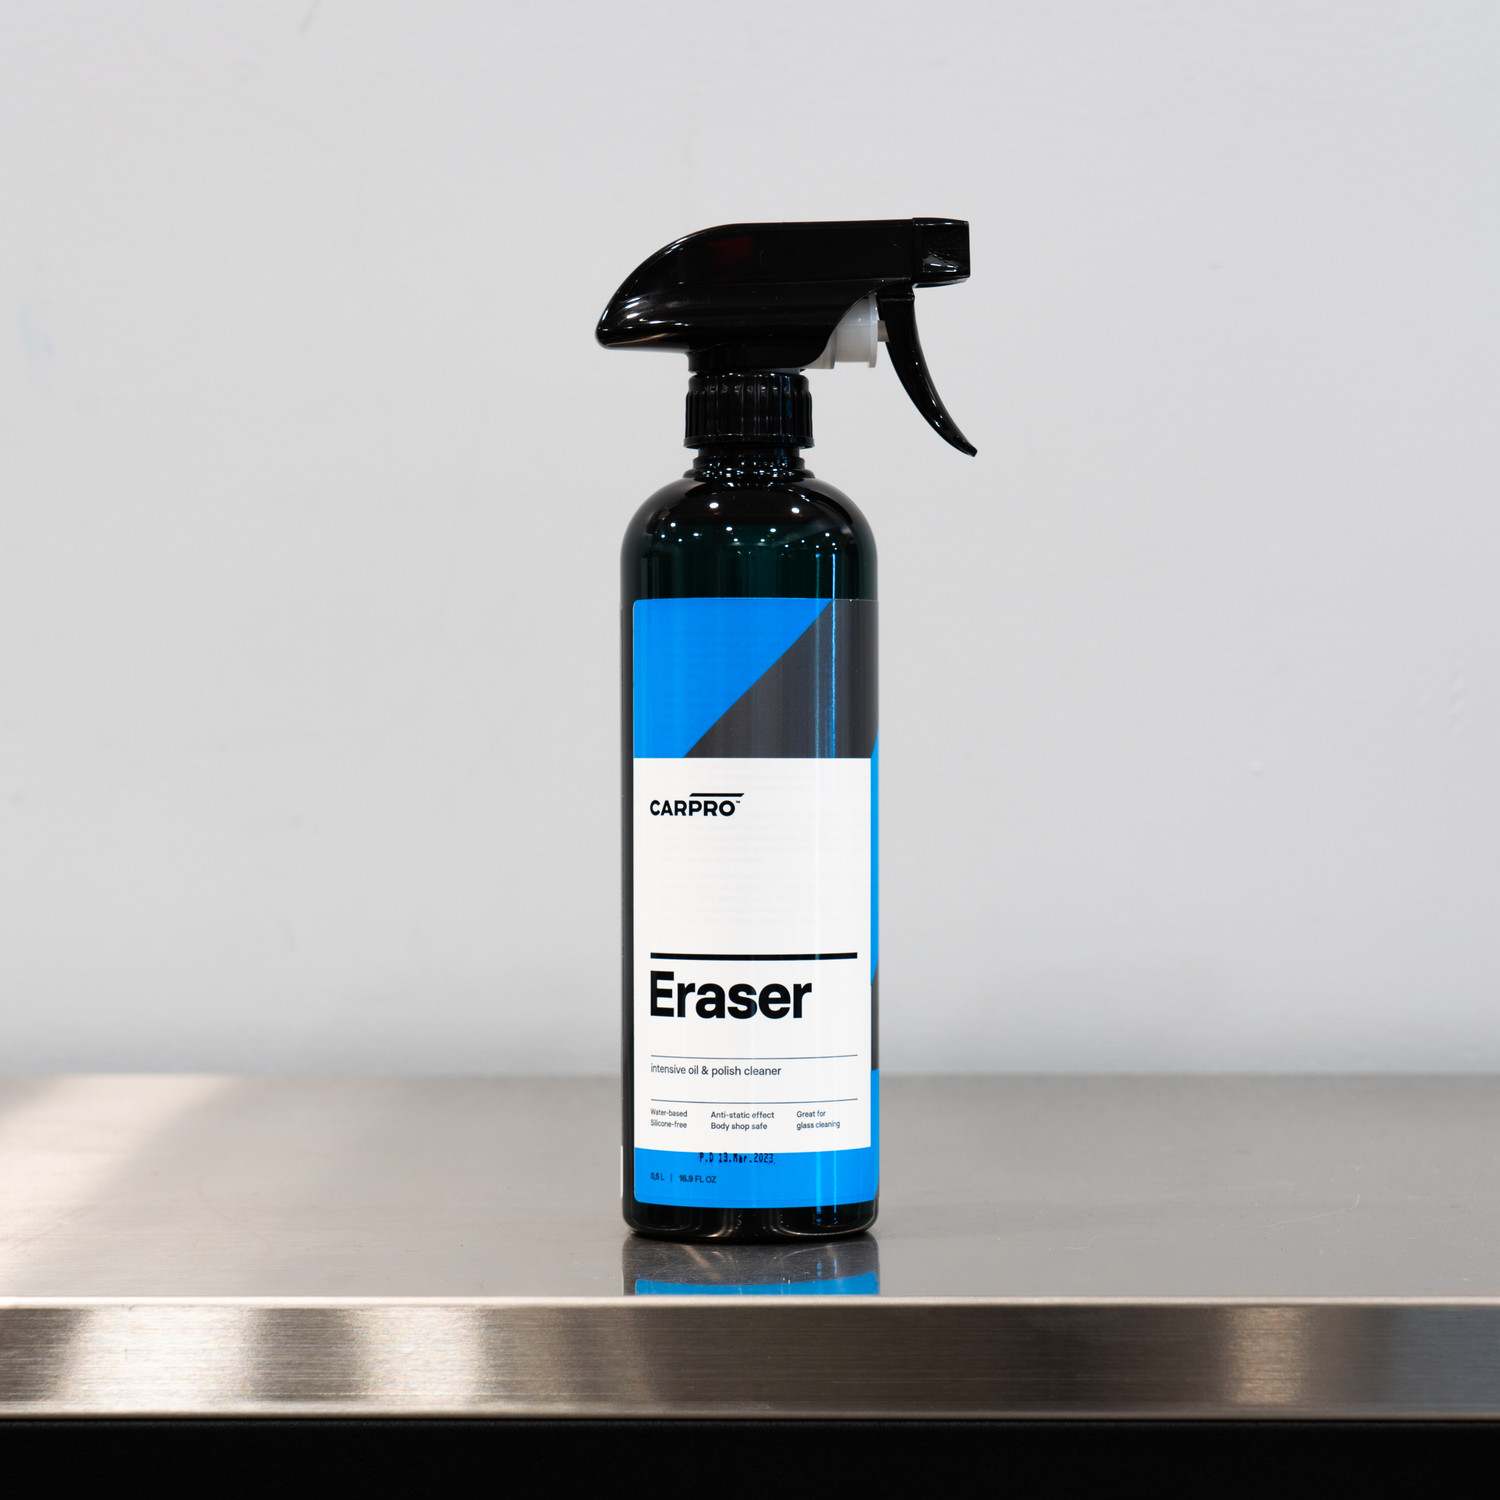 CarPro Eraser 500ml  Intensive Oil and Polish Cleaner Spray